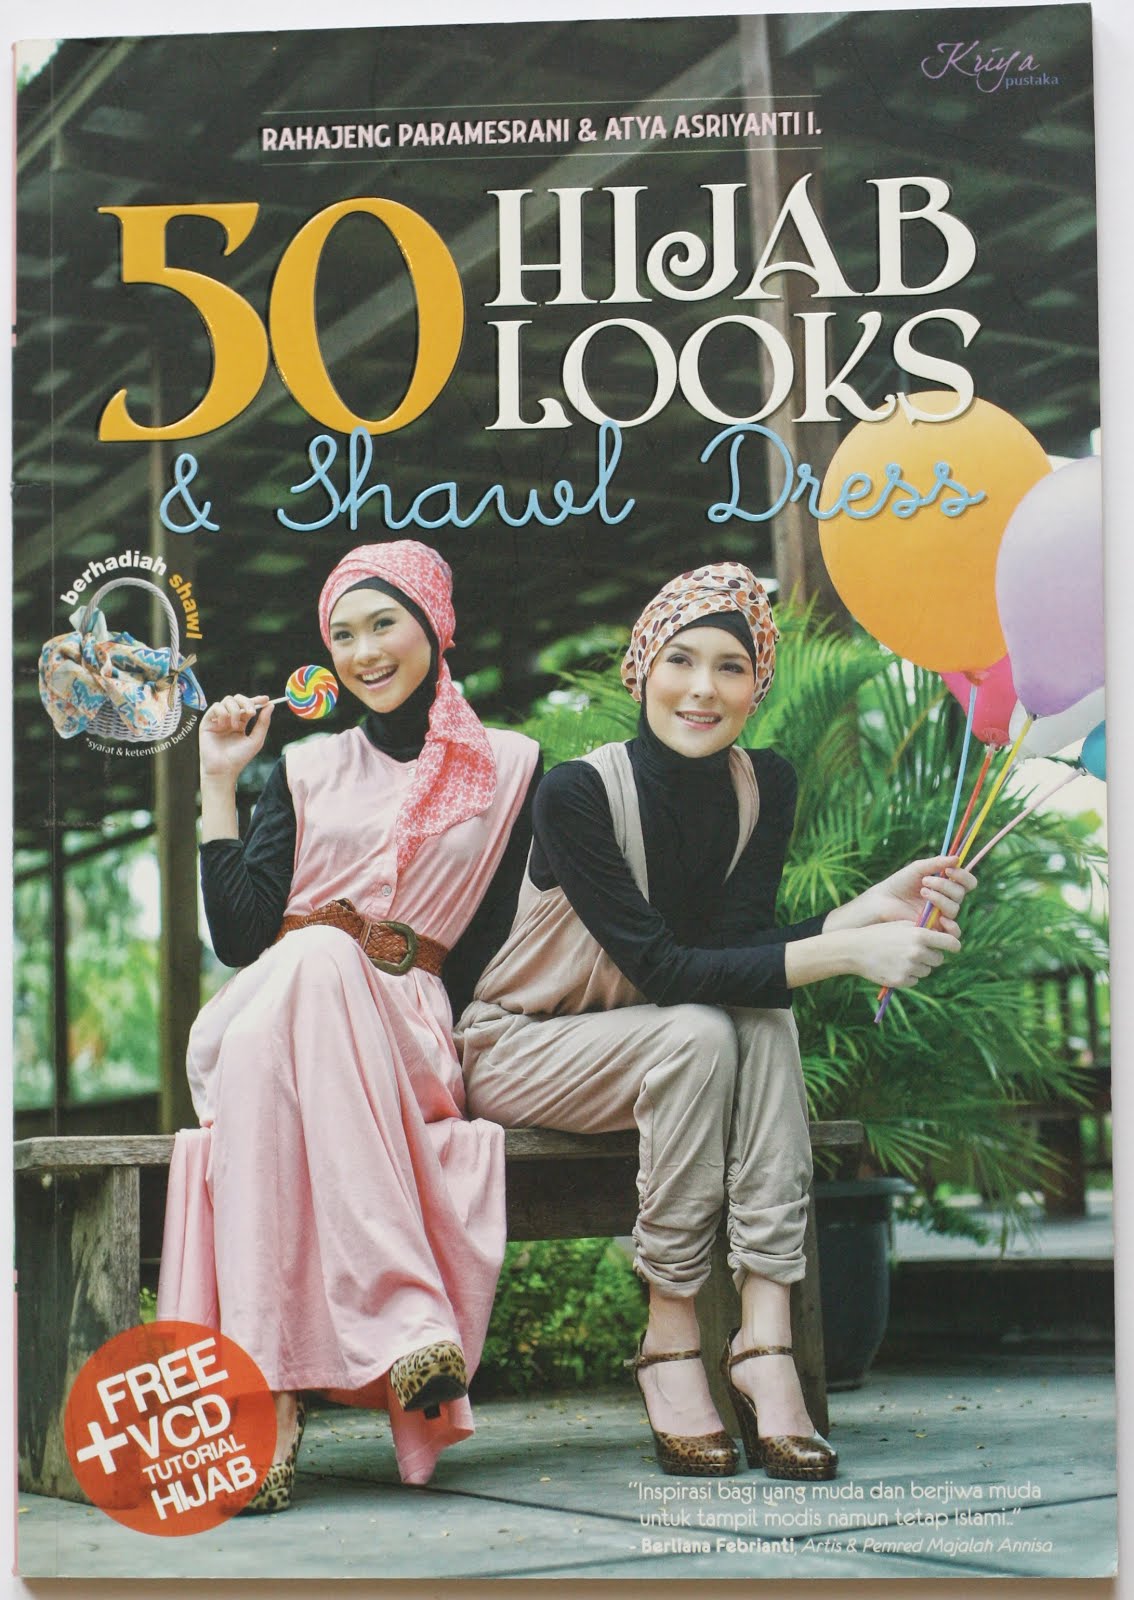 My First Book : 50 Hijab Looks and Shawl Dress